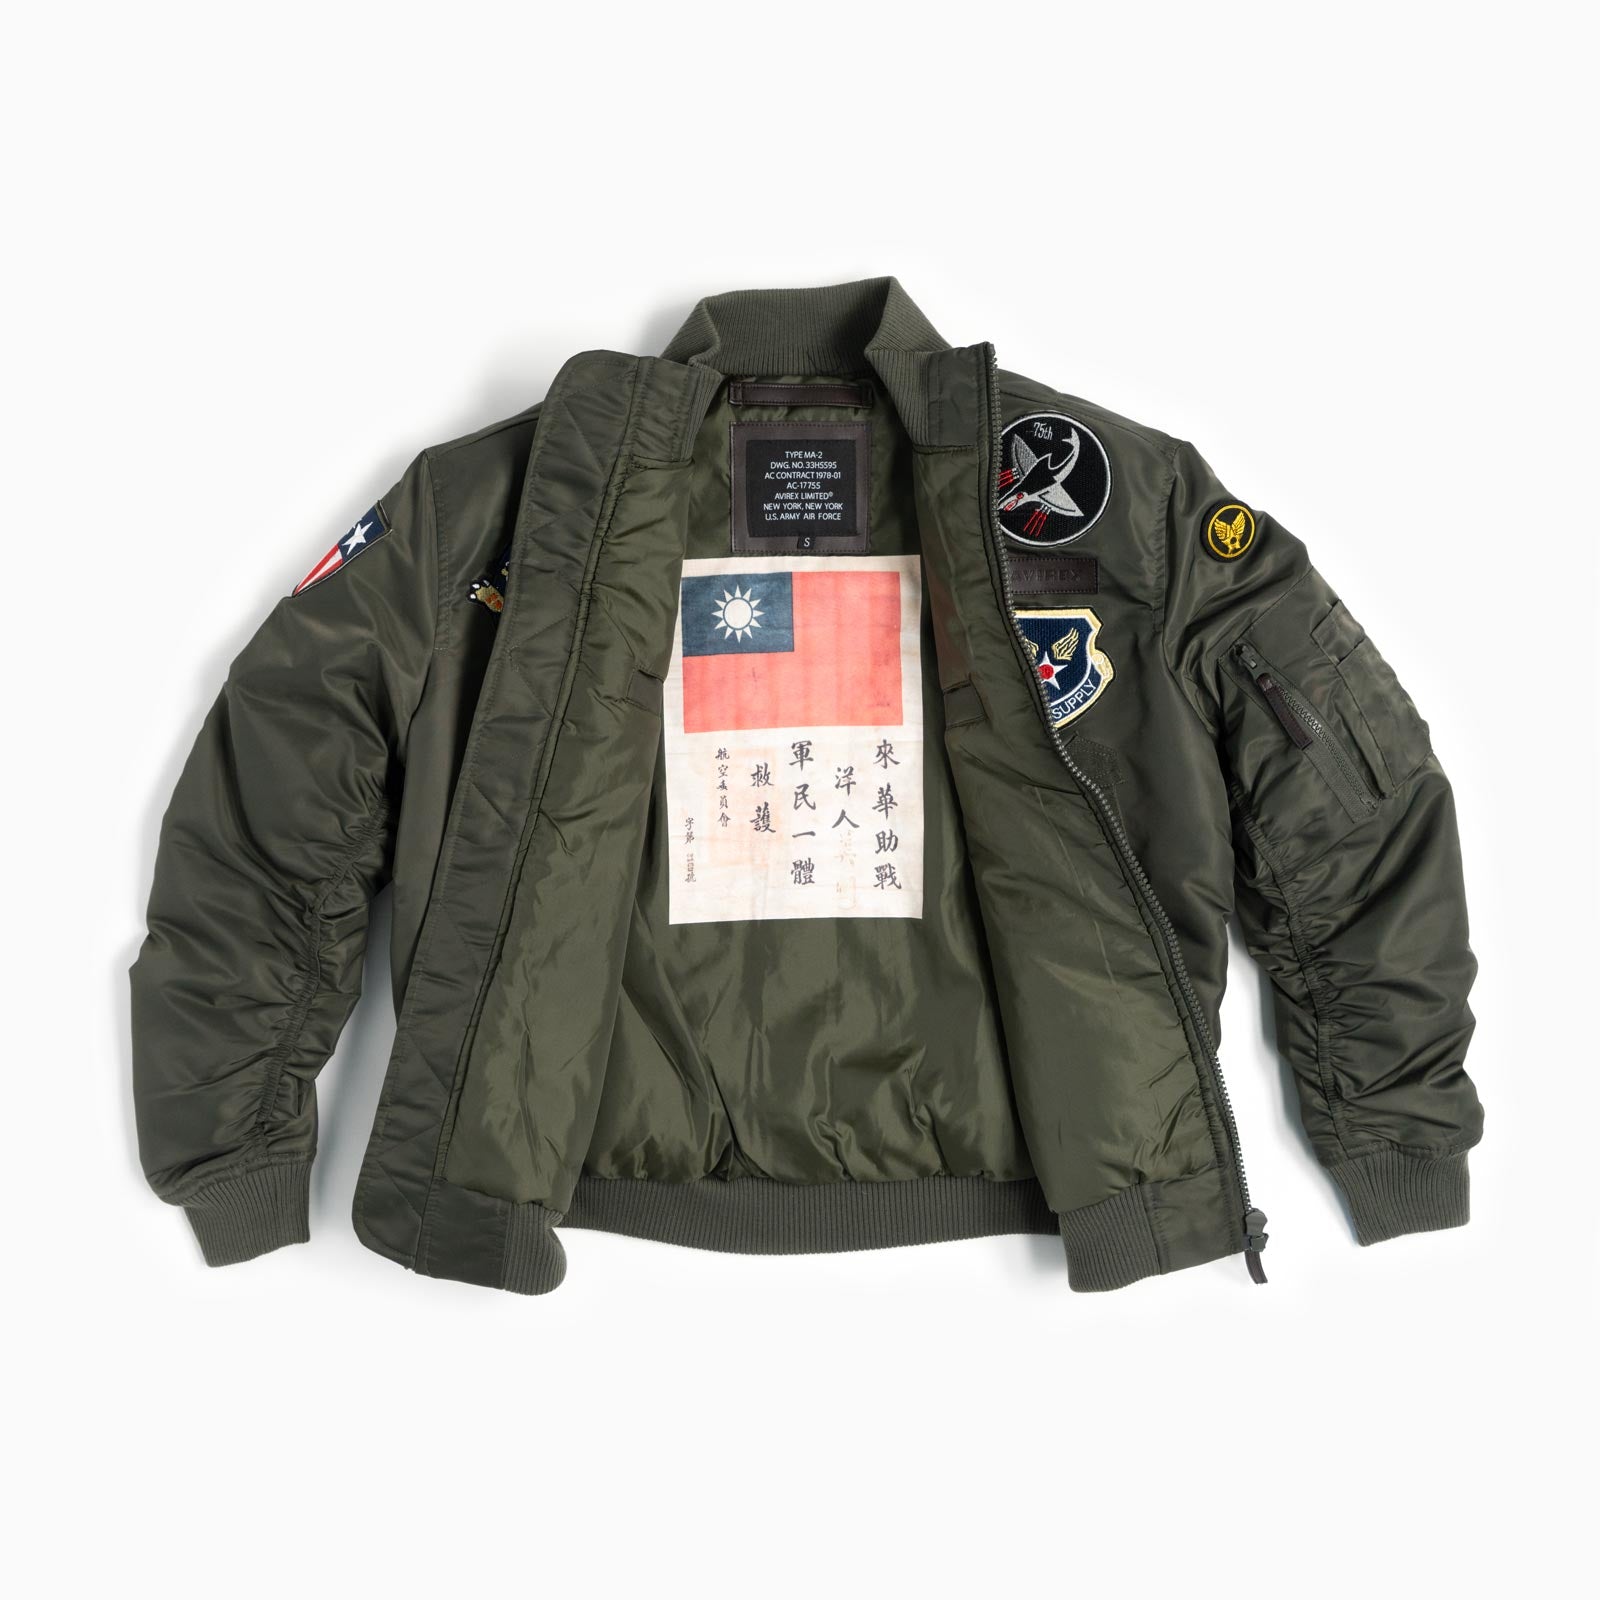 USAF Flight Jacket, Modern A-2 Jacket